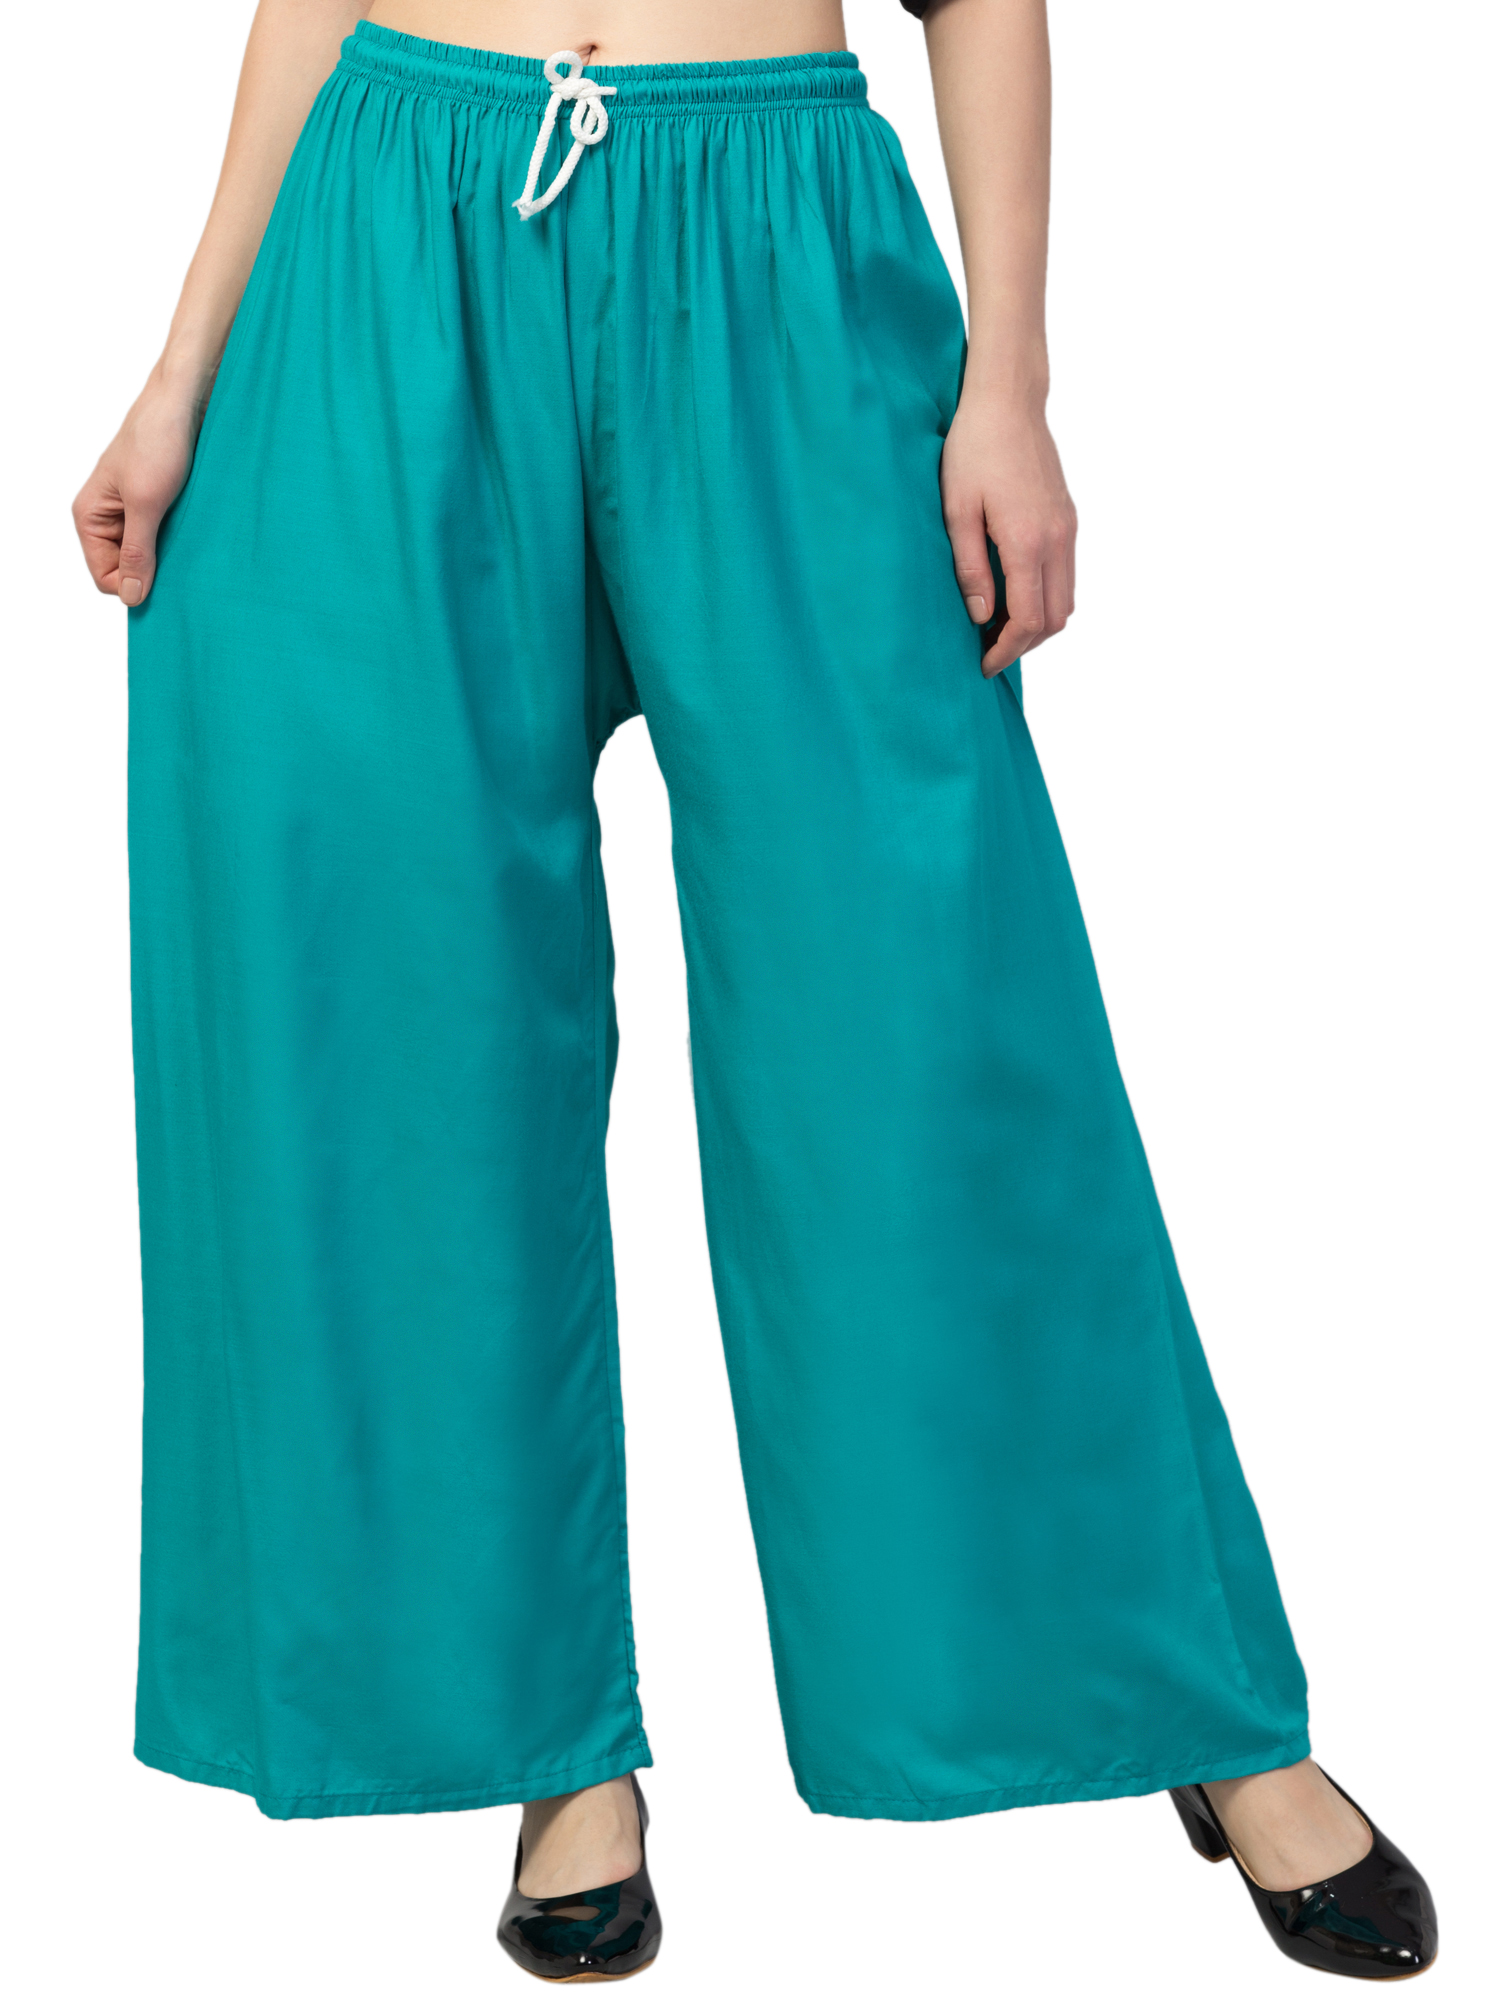 LUXUR Women Solid Color Long Pants Casual Summer Palazzo Pant Blue L 